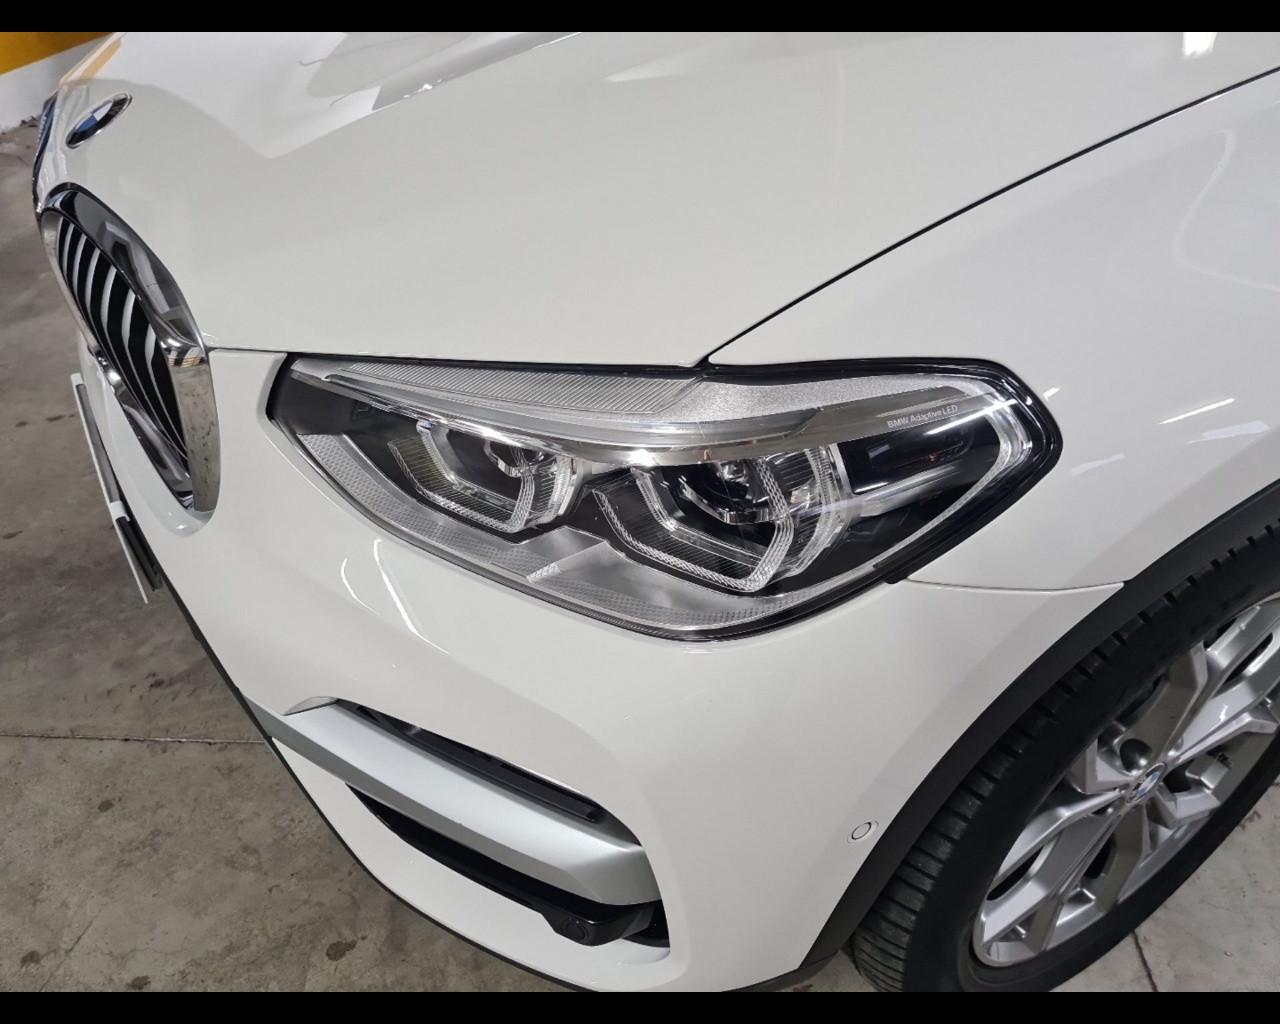 BMW X3 G01 2017 25D XLINE